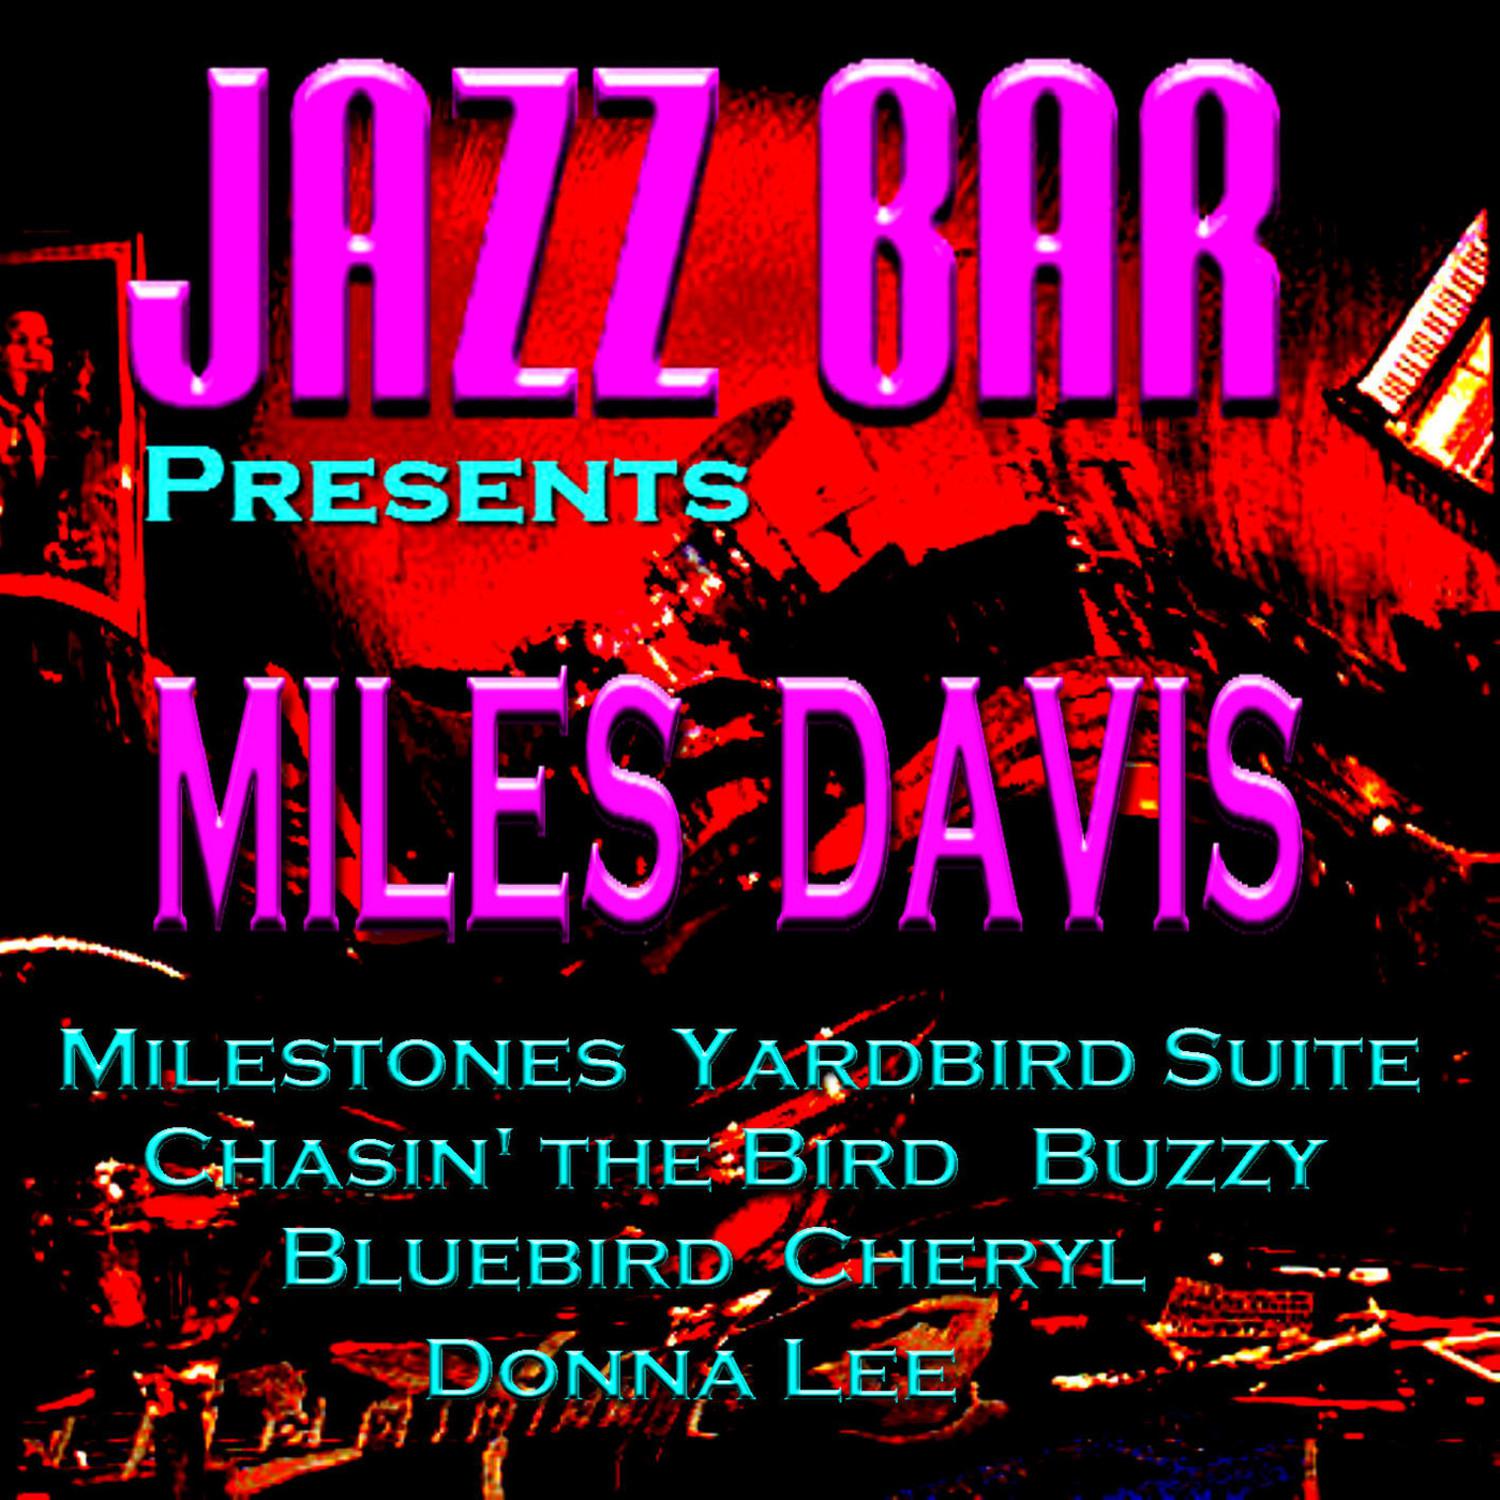 Jazz Bar Presents Miles Davis